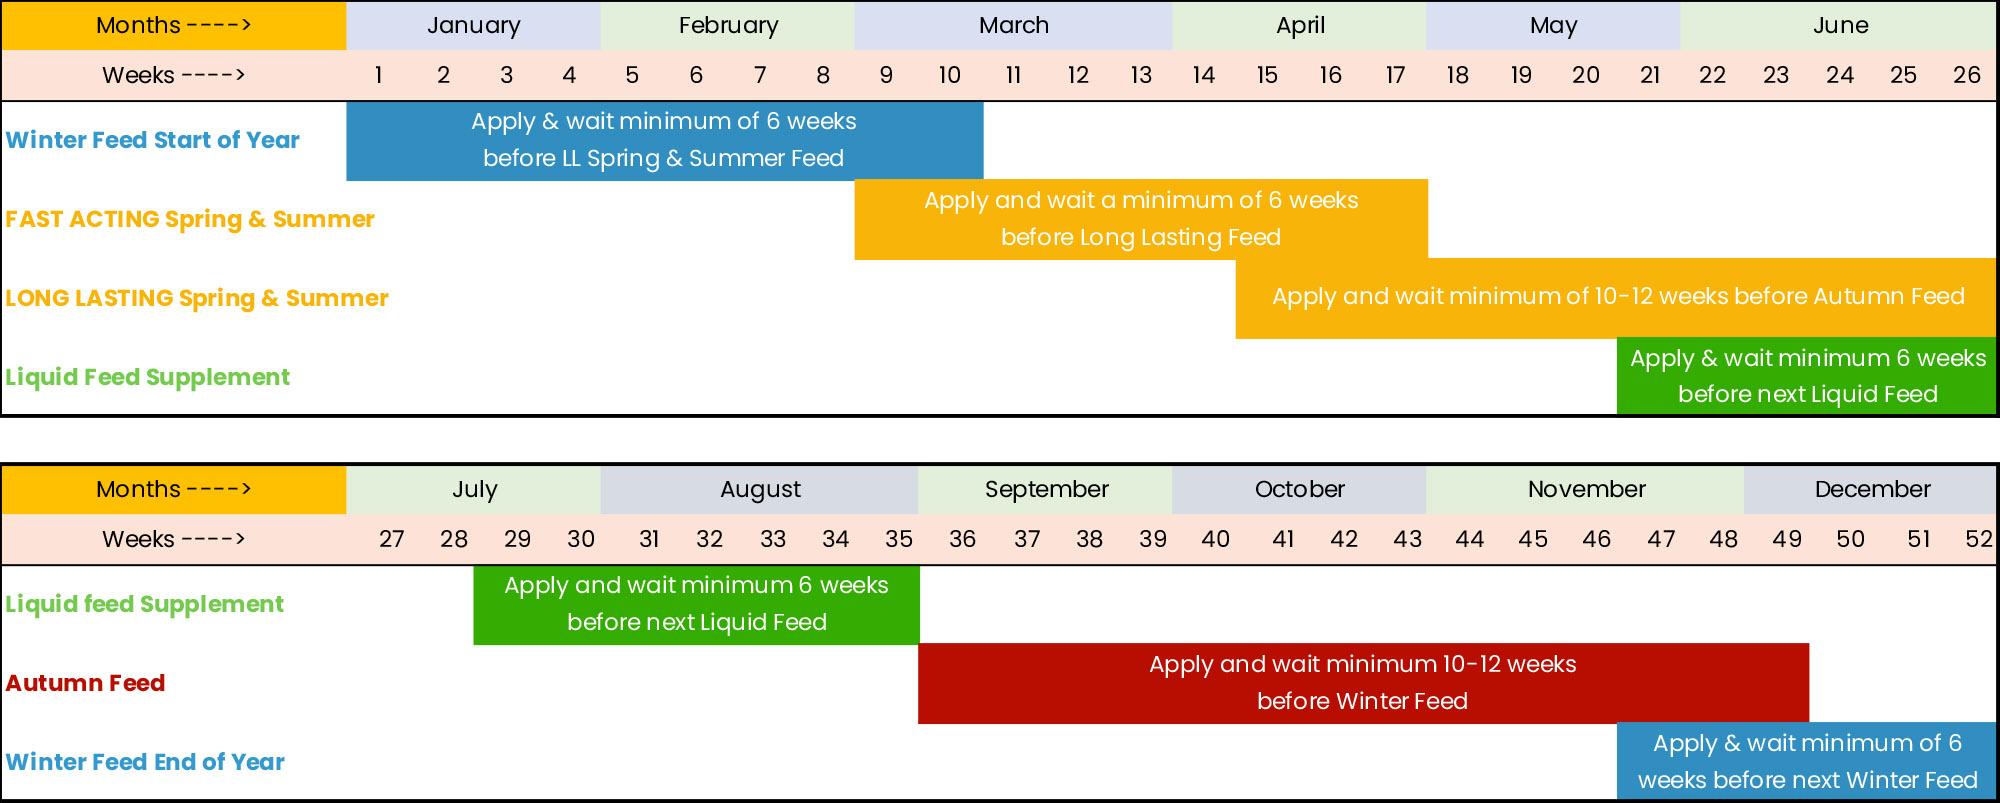 Month by Month Lawn Care Calendar Lawn Feed Fertiliser